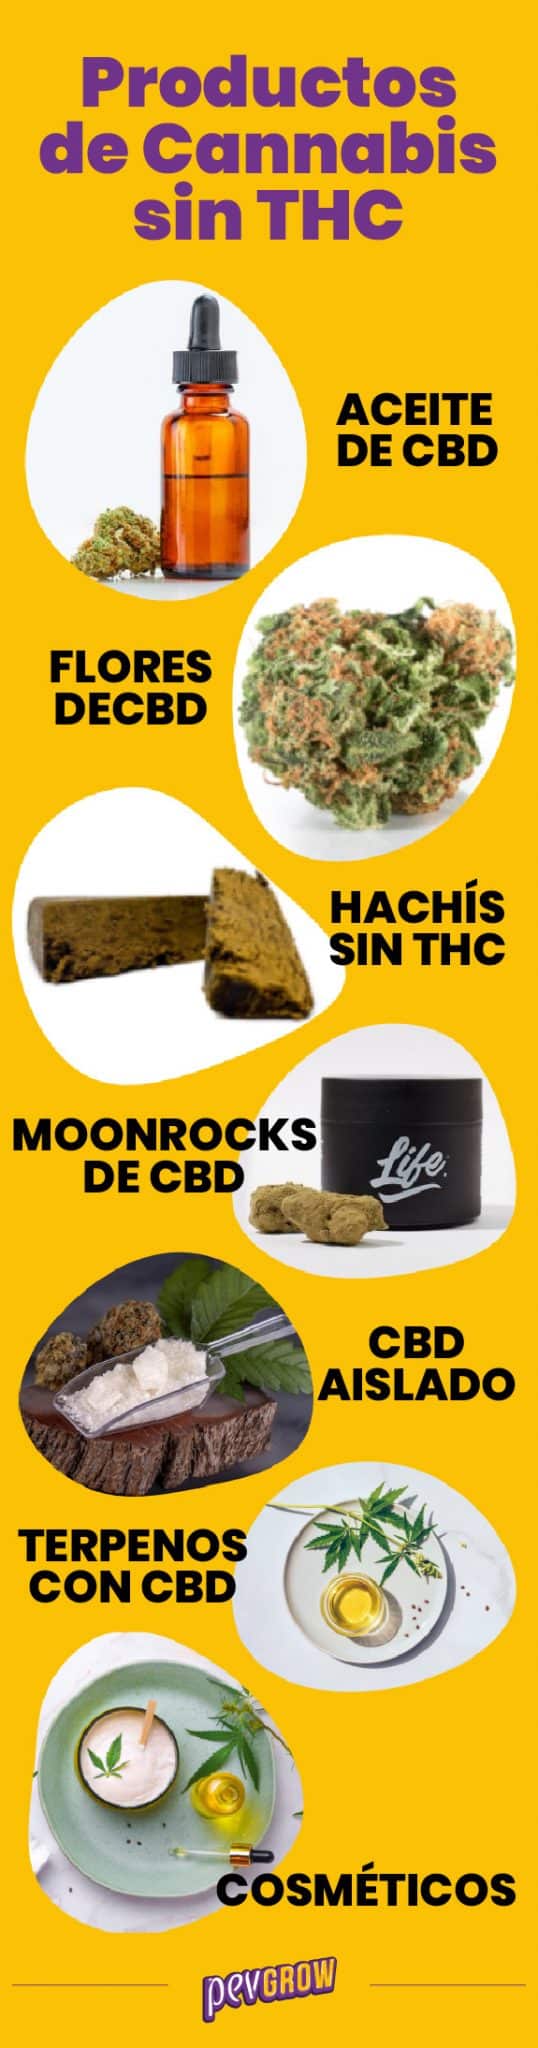 Lista de productos de marihuana sin THC